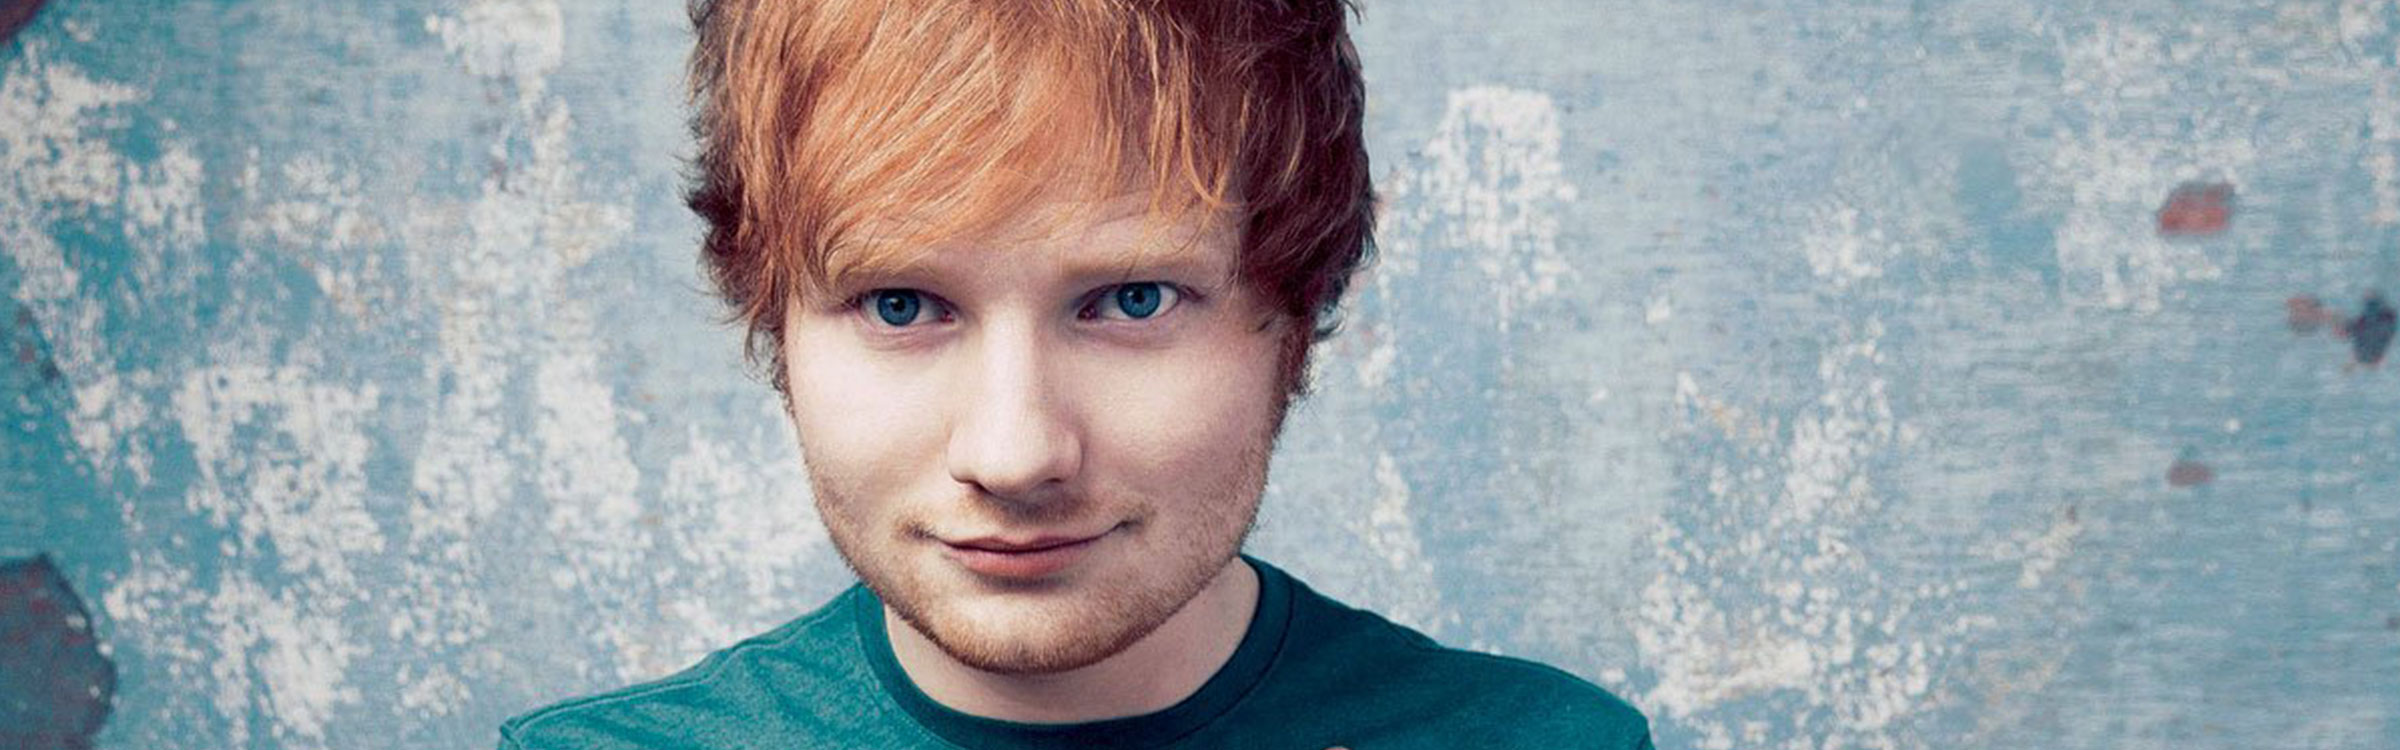 Ed sheeran header 4 april